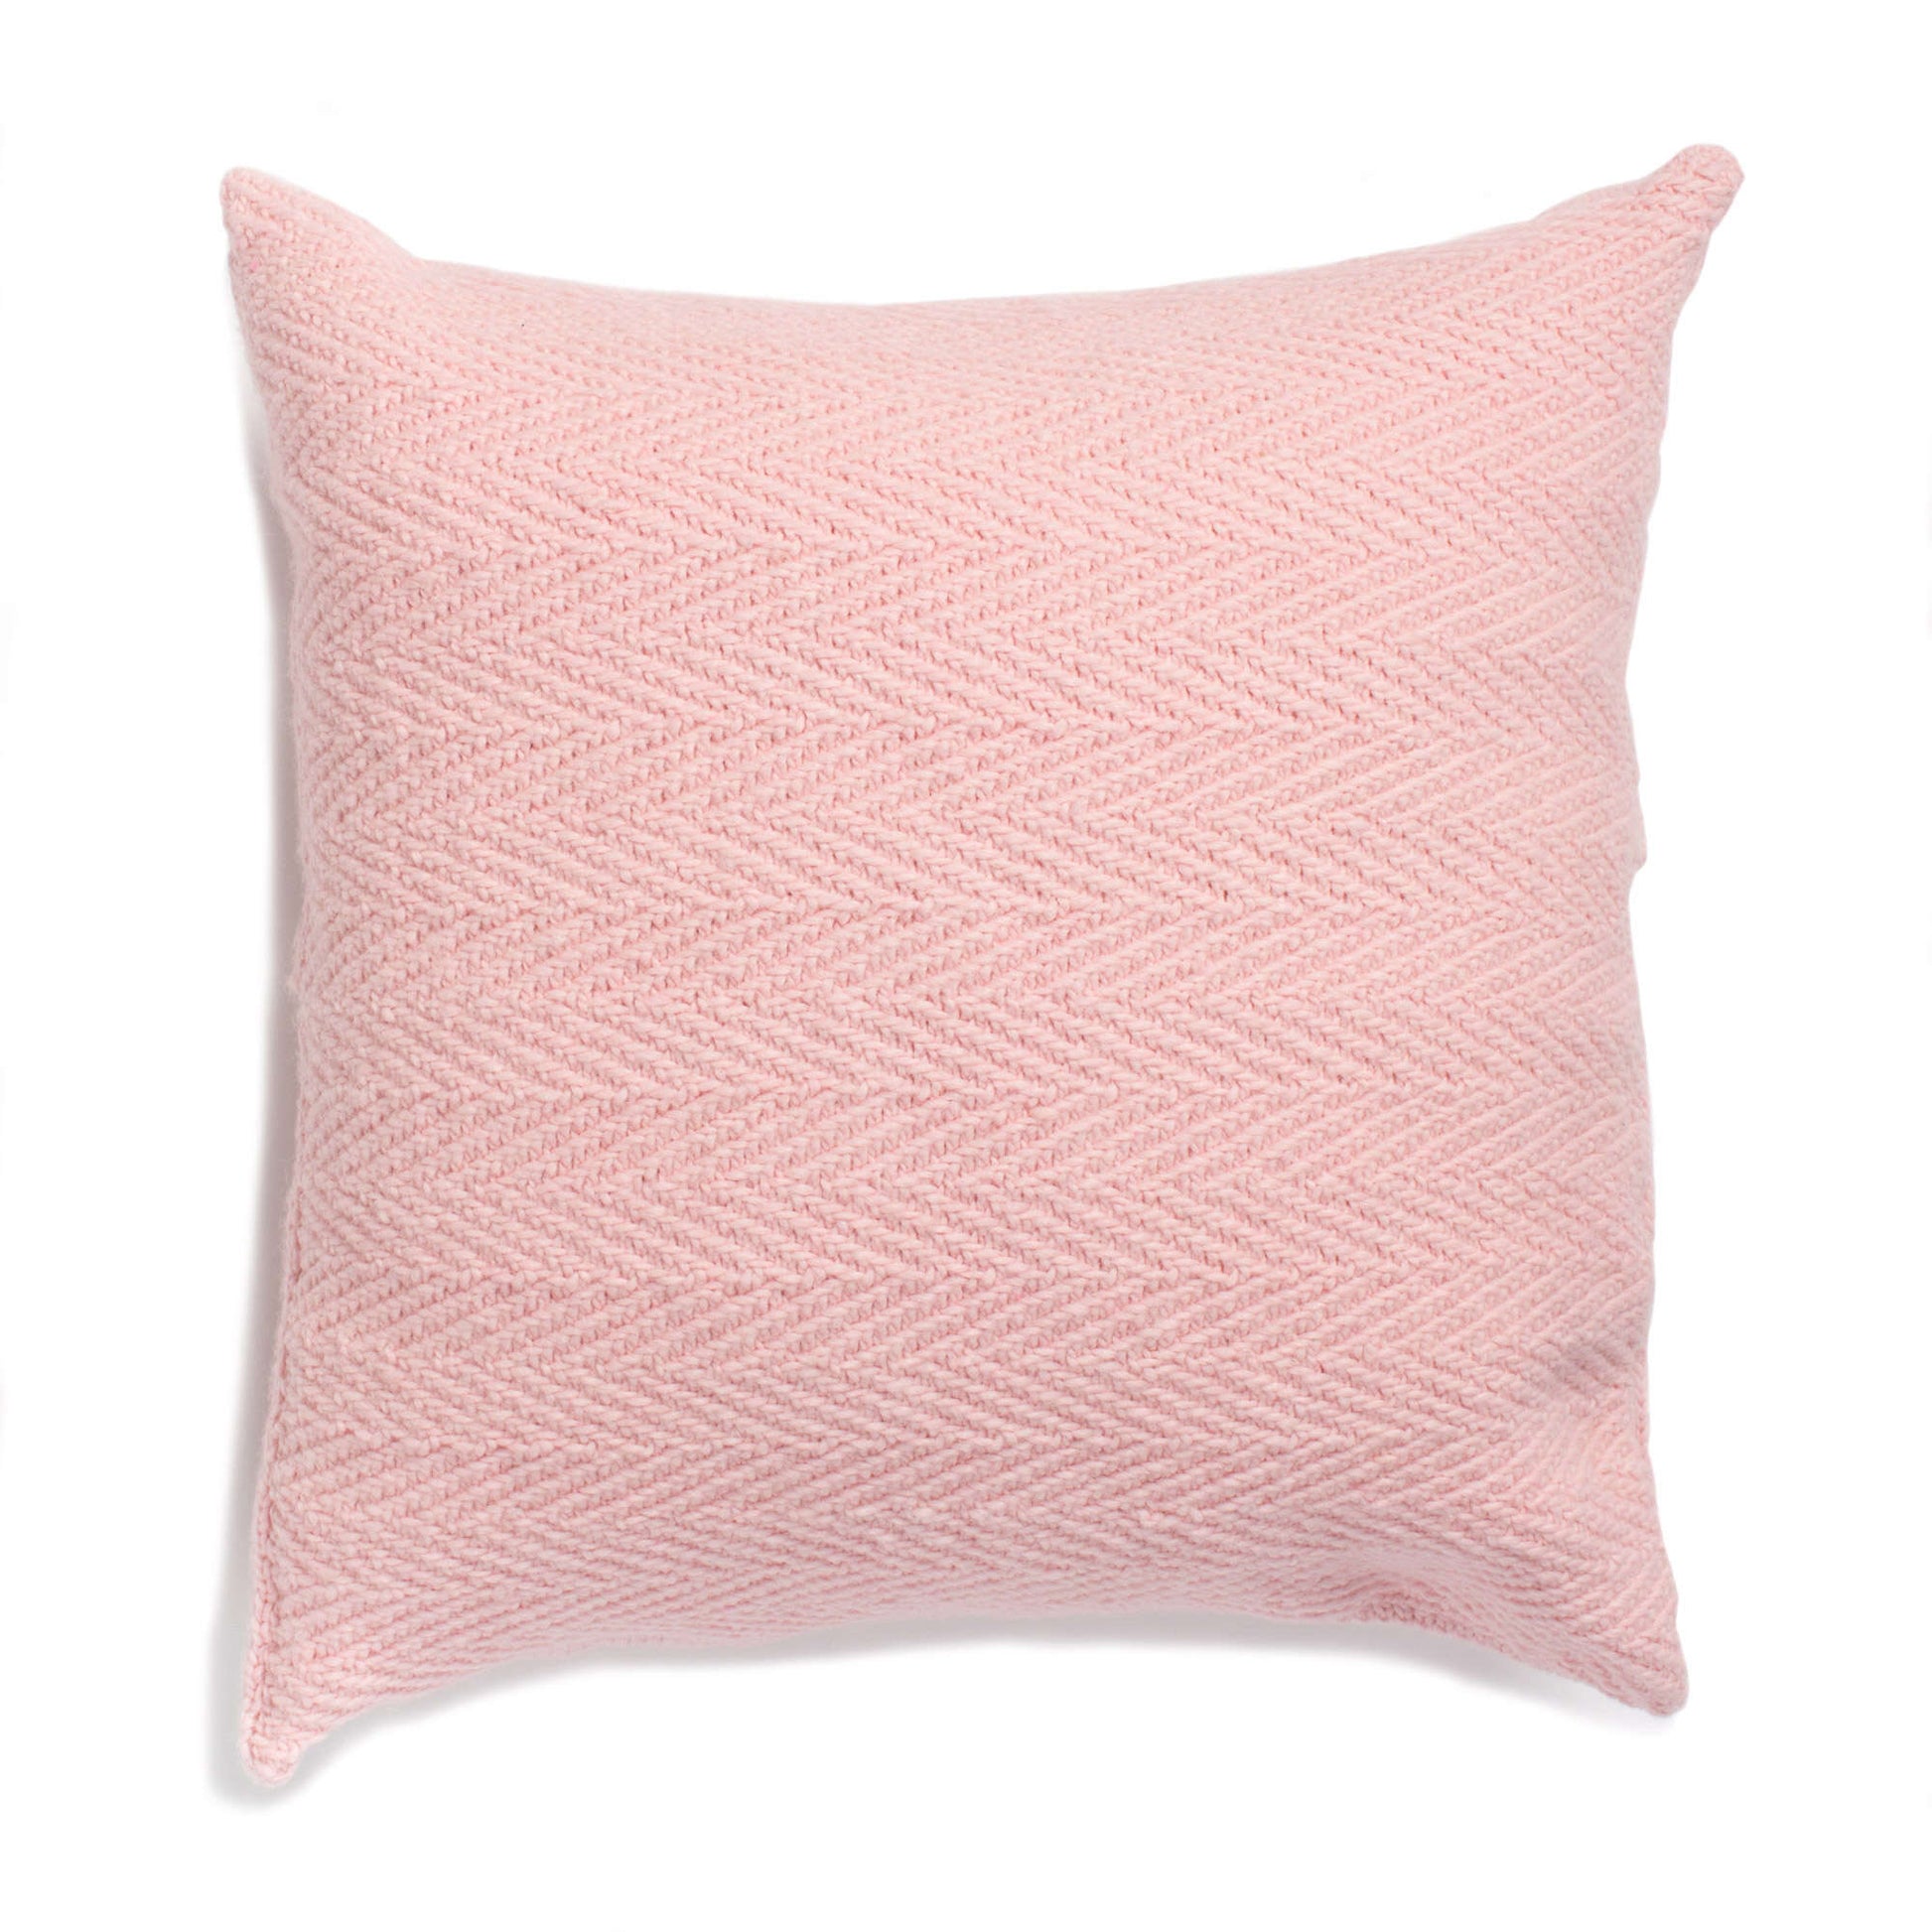 Free Patons Knit Herringbone Pillow Pattern